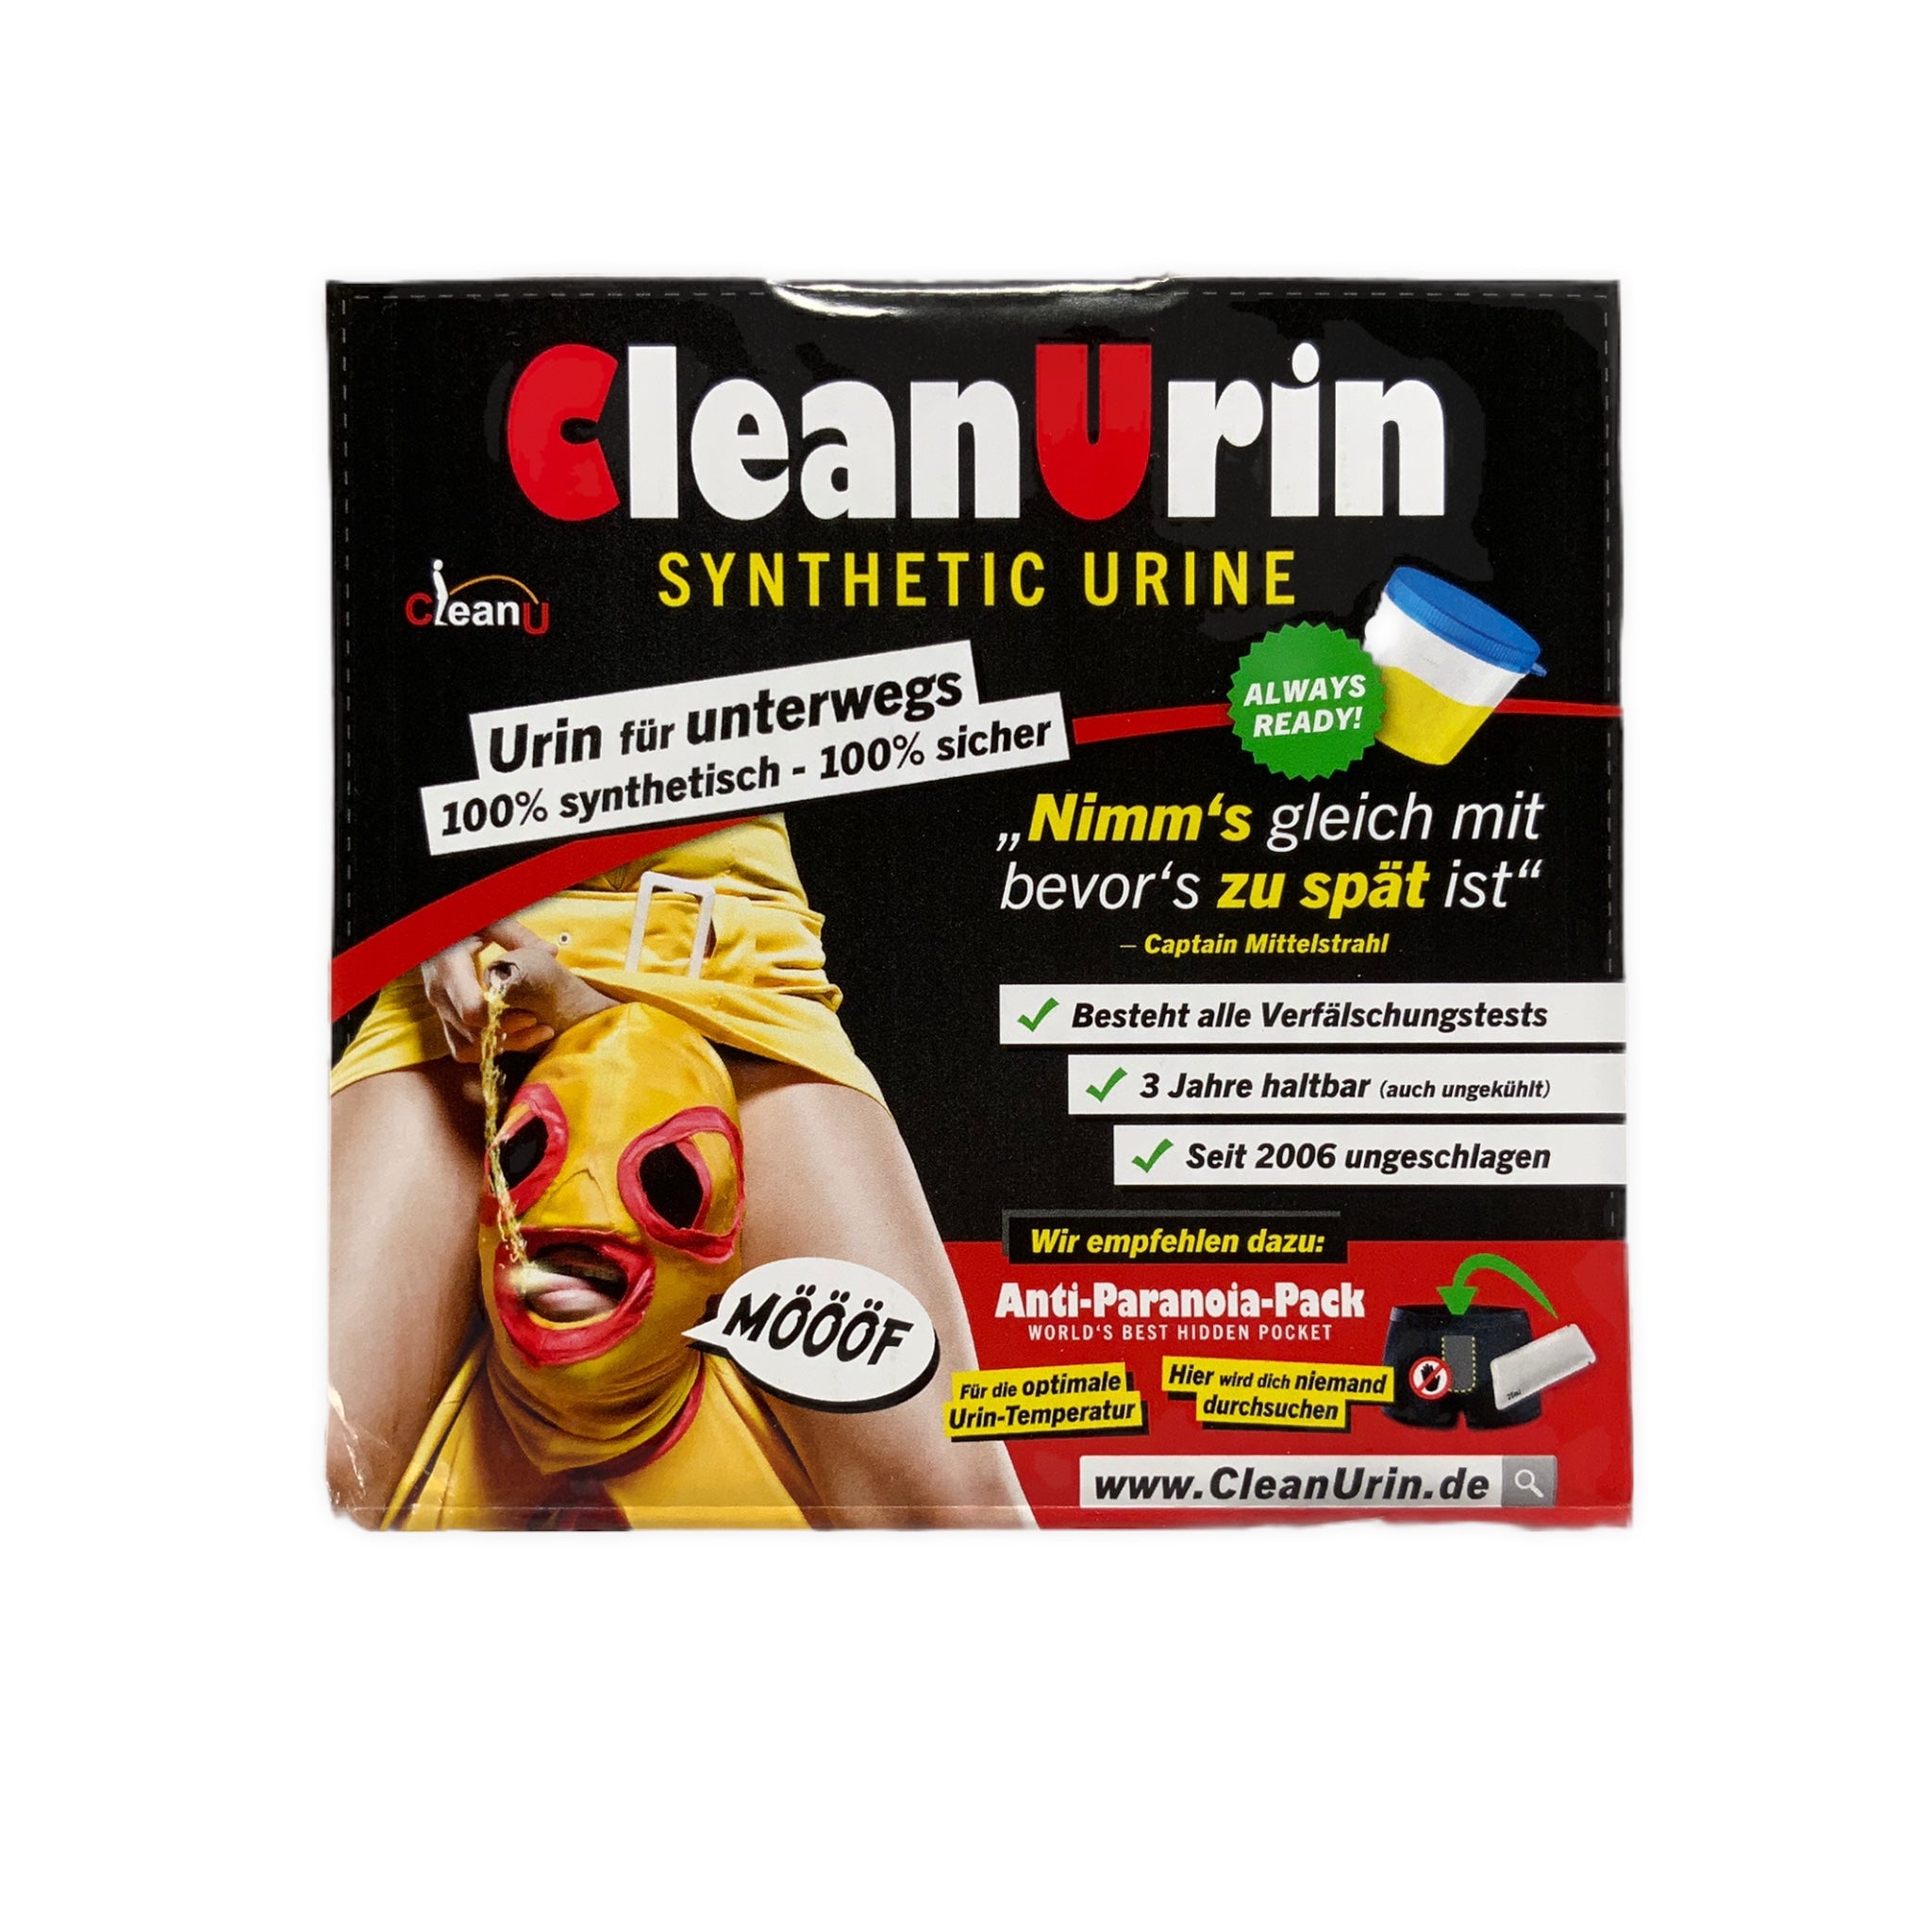 Clean Urin Werbung